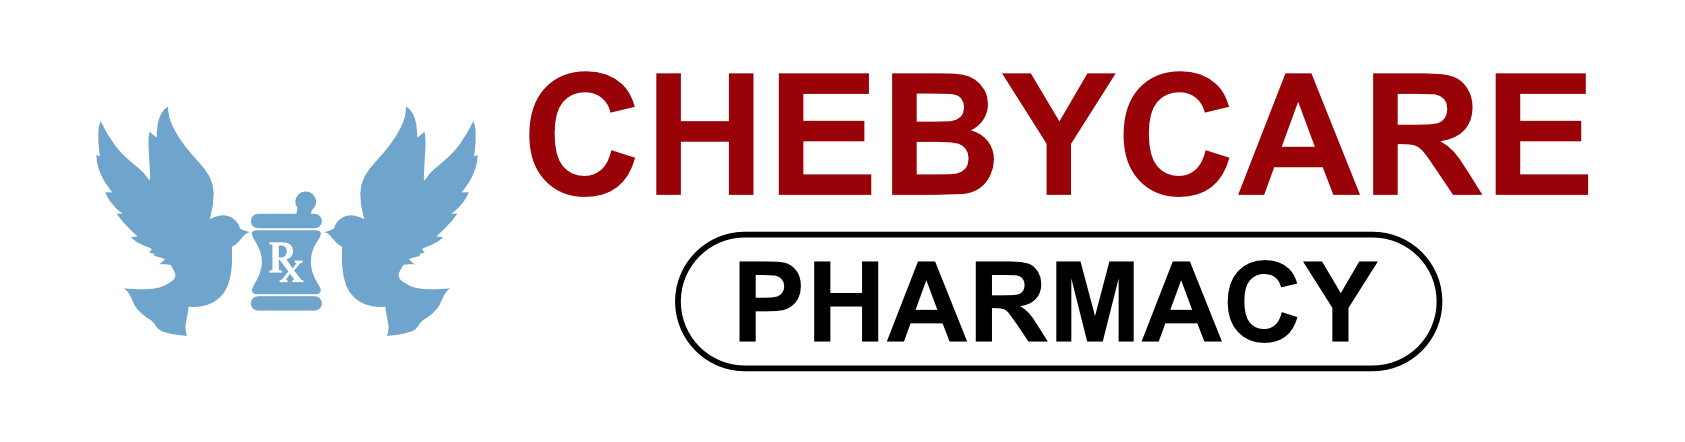 Chebycare Pharmacy